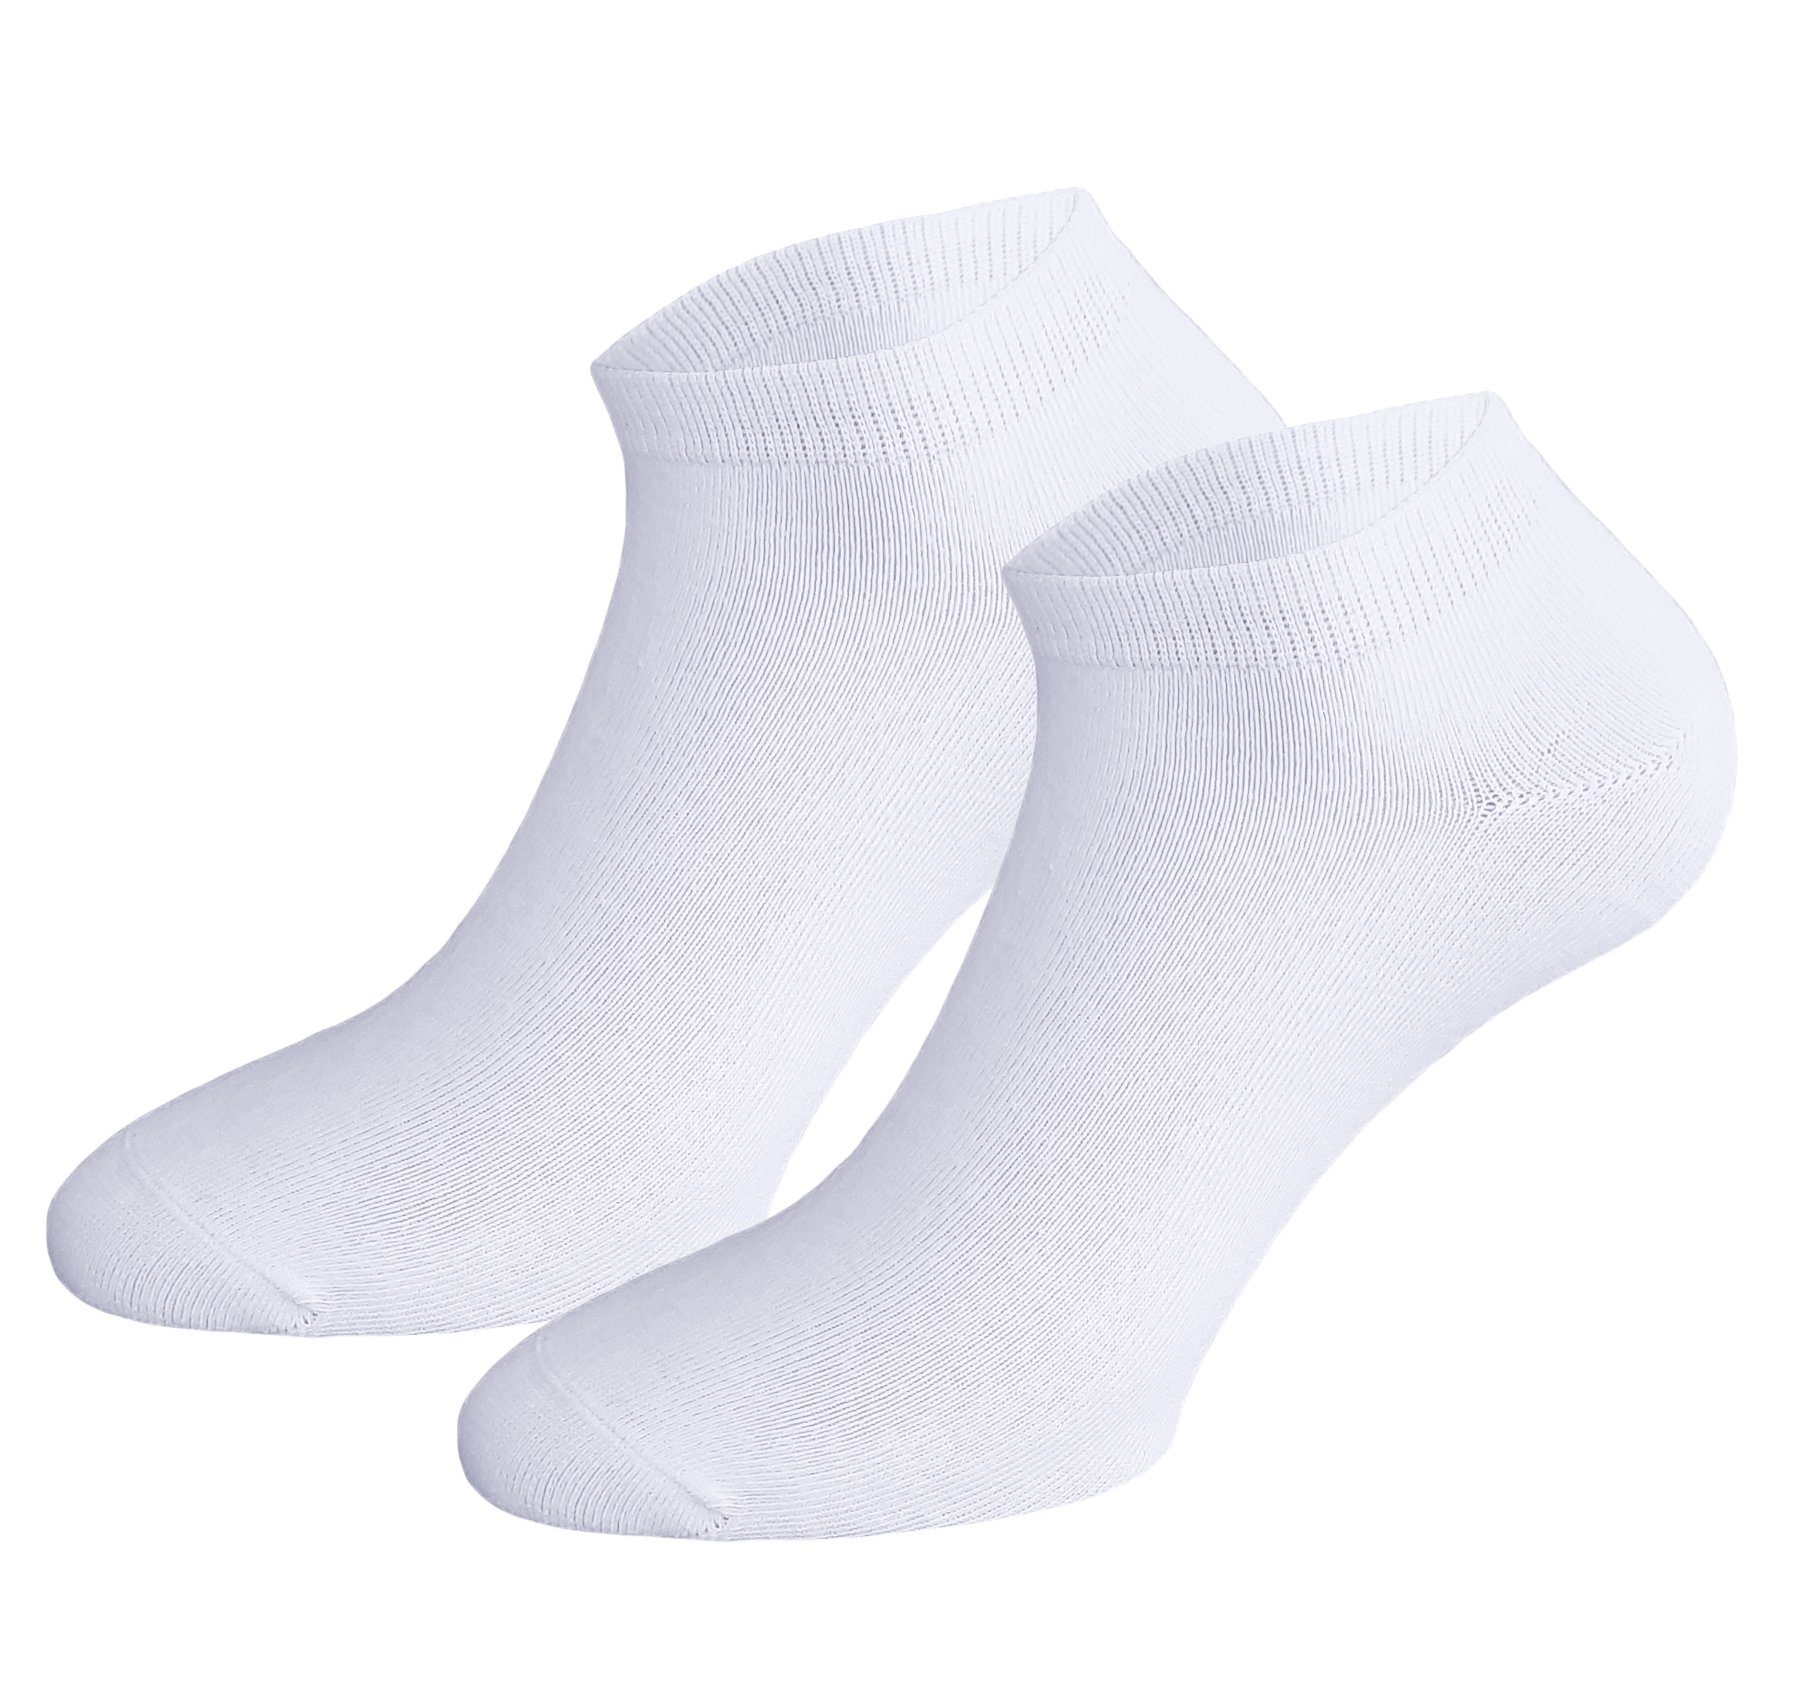 Sockenhimmel Sneakersocken Socken für kurze (sehr Basic Damen Naht Sportsocken in Weiß Farben leichte maschinengekettelte flach) Paar) Sommersocken (10